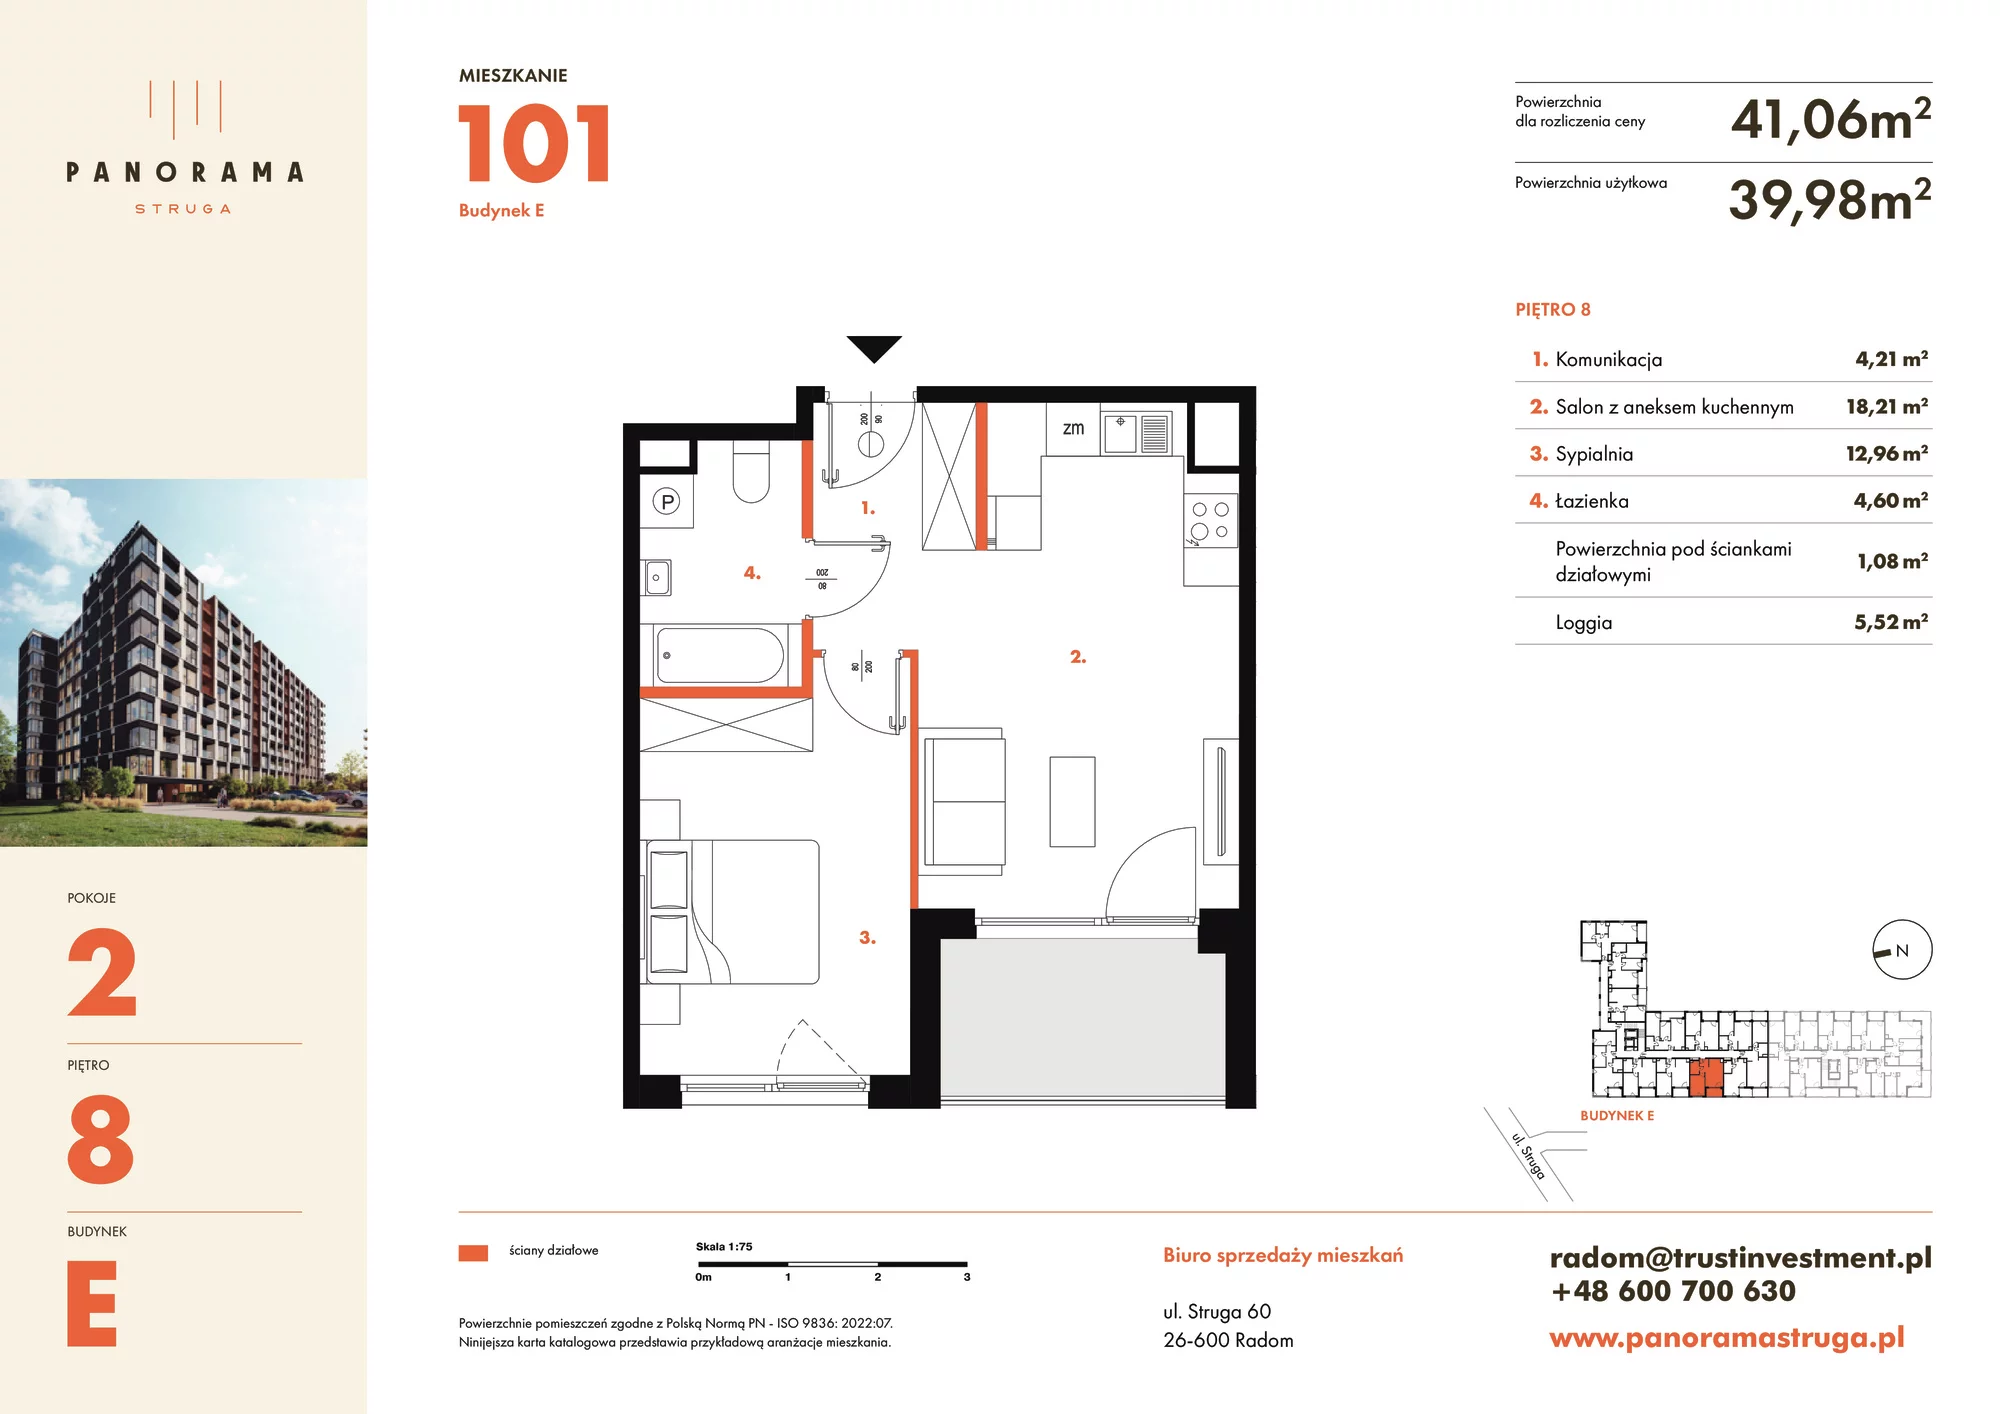 Mieszkanie 41,06 m², piętro 8, oferta nr E101, Panorama Struga, Radom, Śródmieście, ul. Andrzeja Struga 60